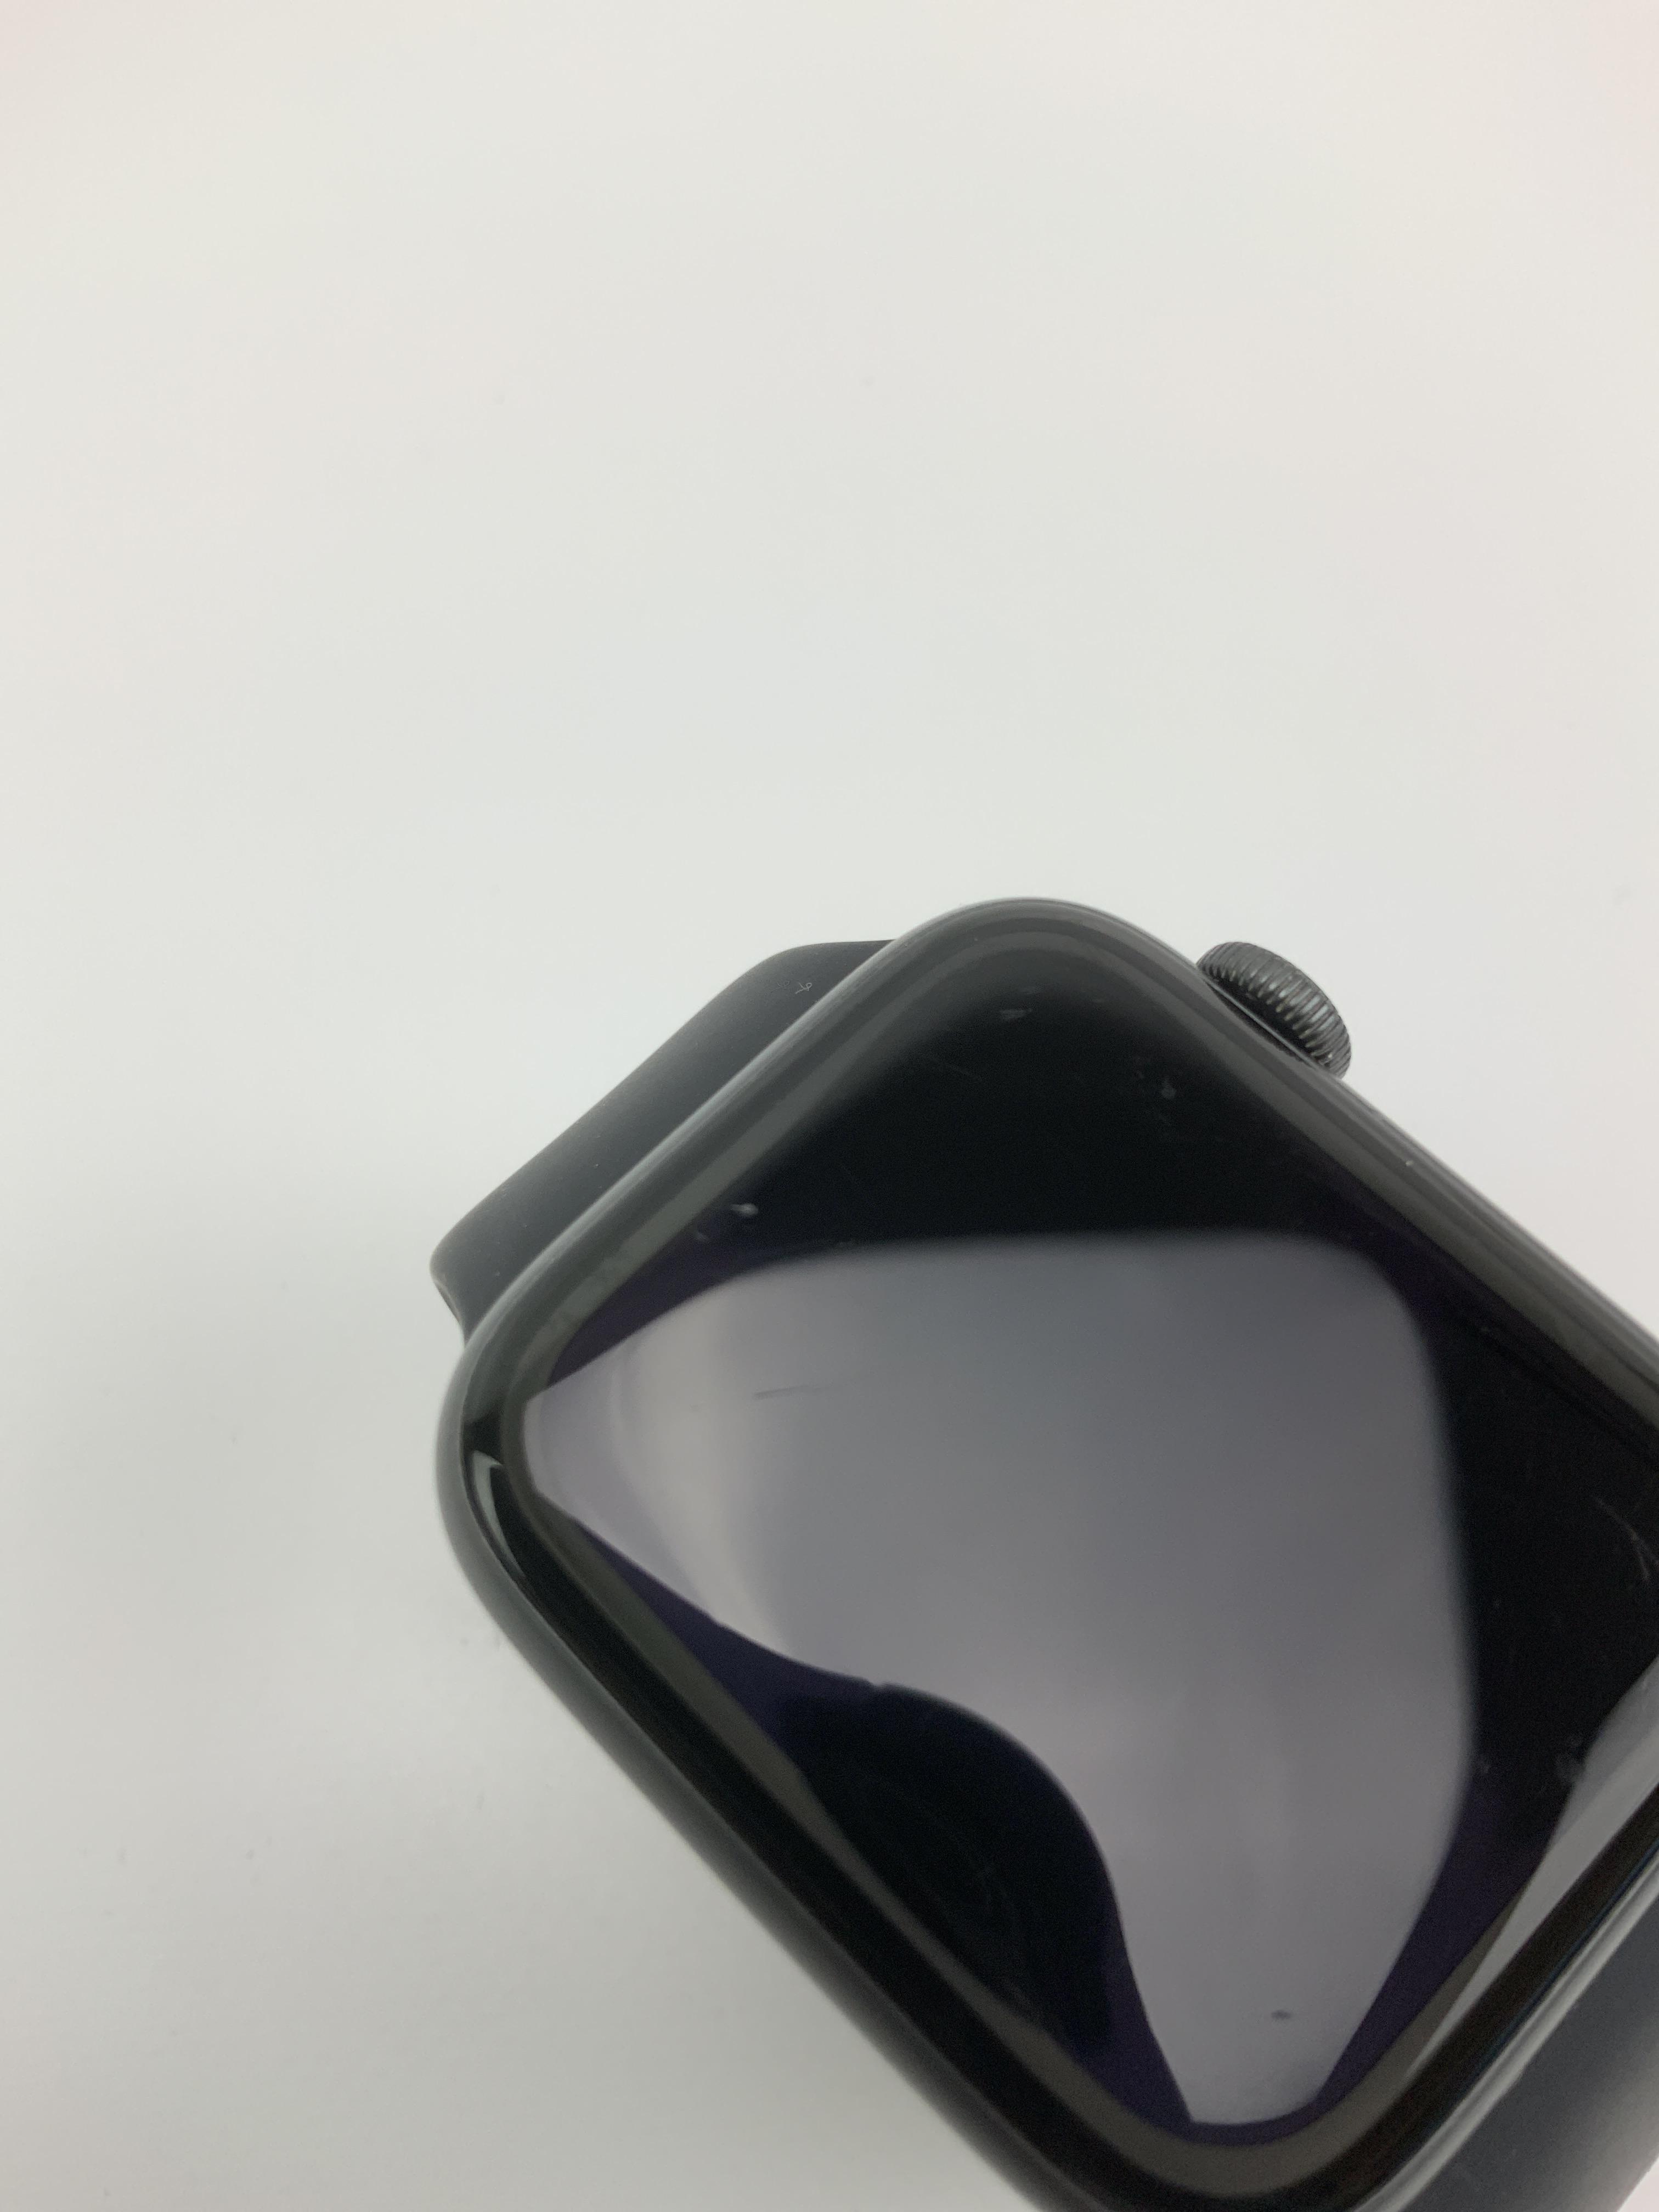 Watch Series 5 Aluminum (44mm), Space Gray, Afbeelding 3